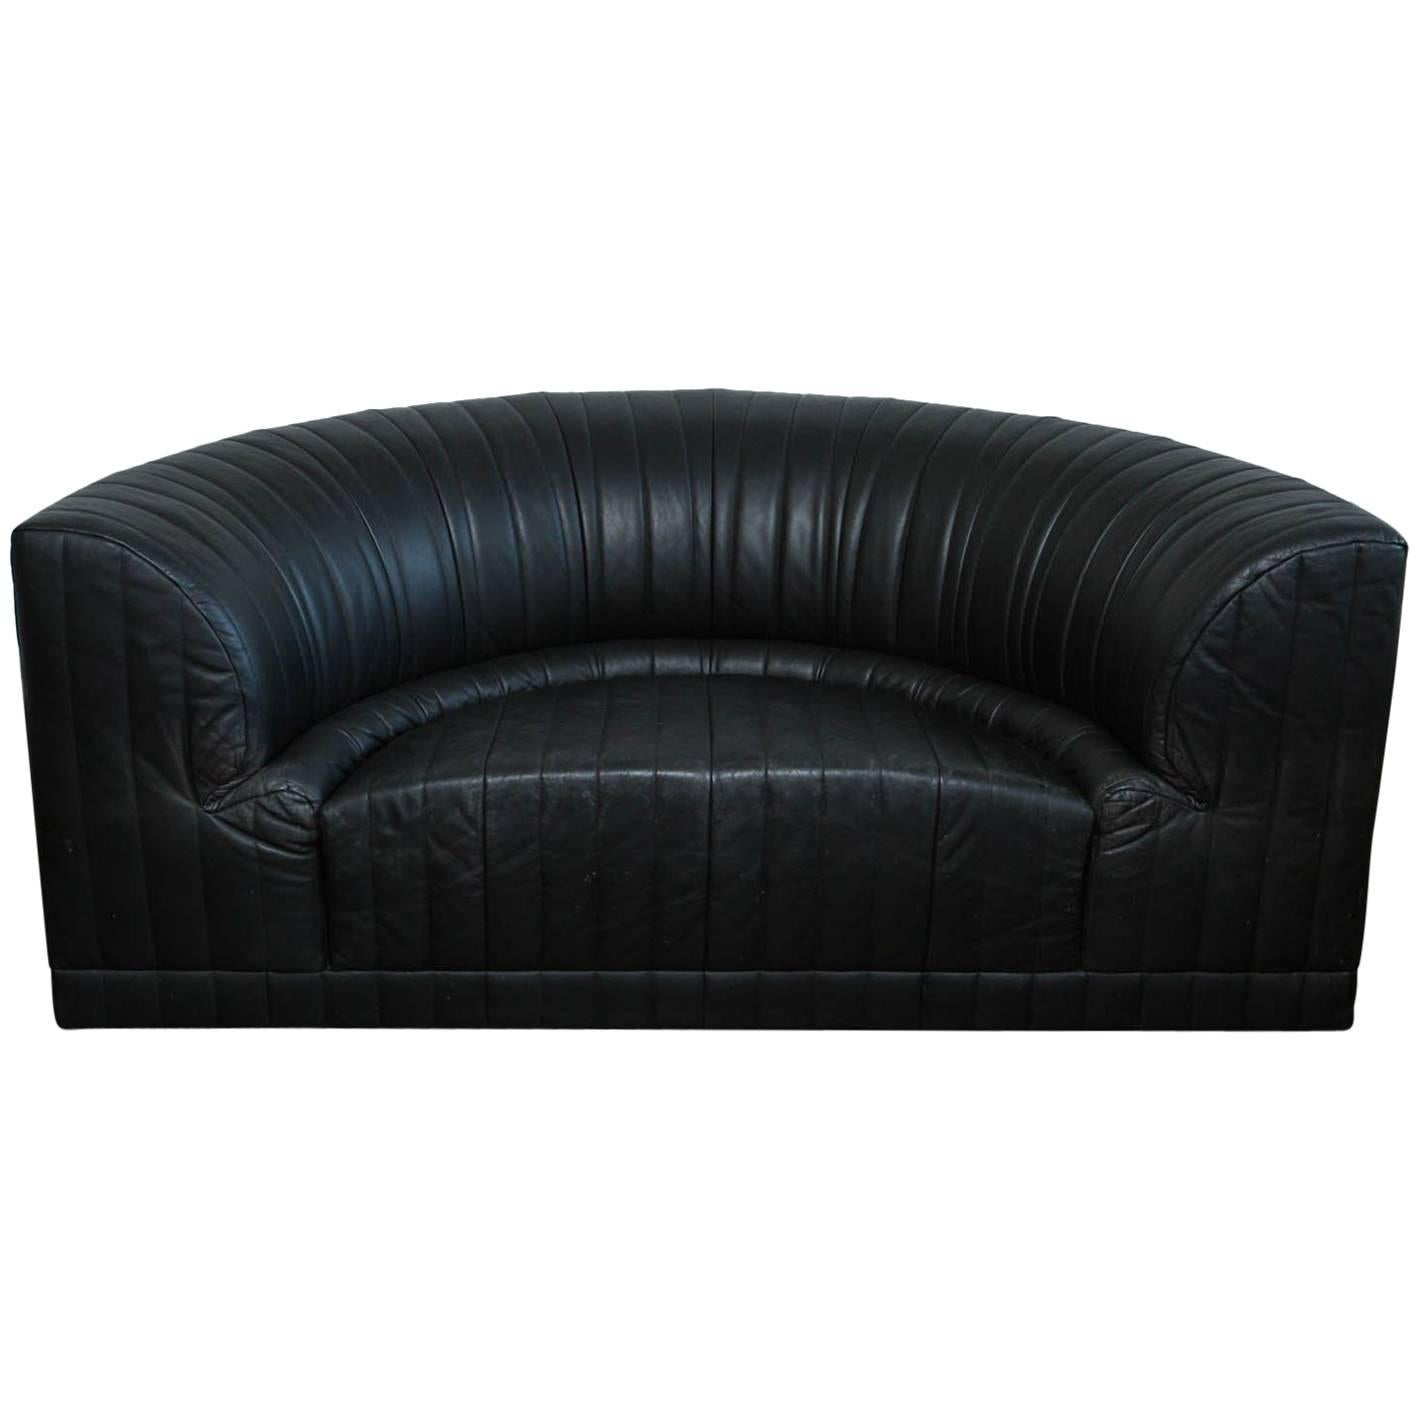 Vintage Maurice Villency Crescent Leather Sofa